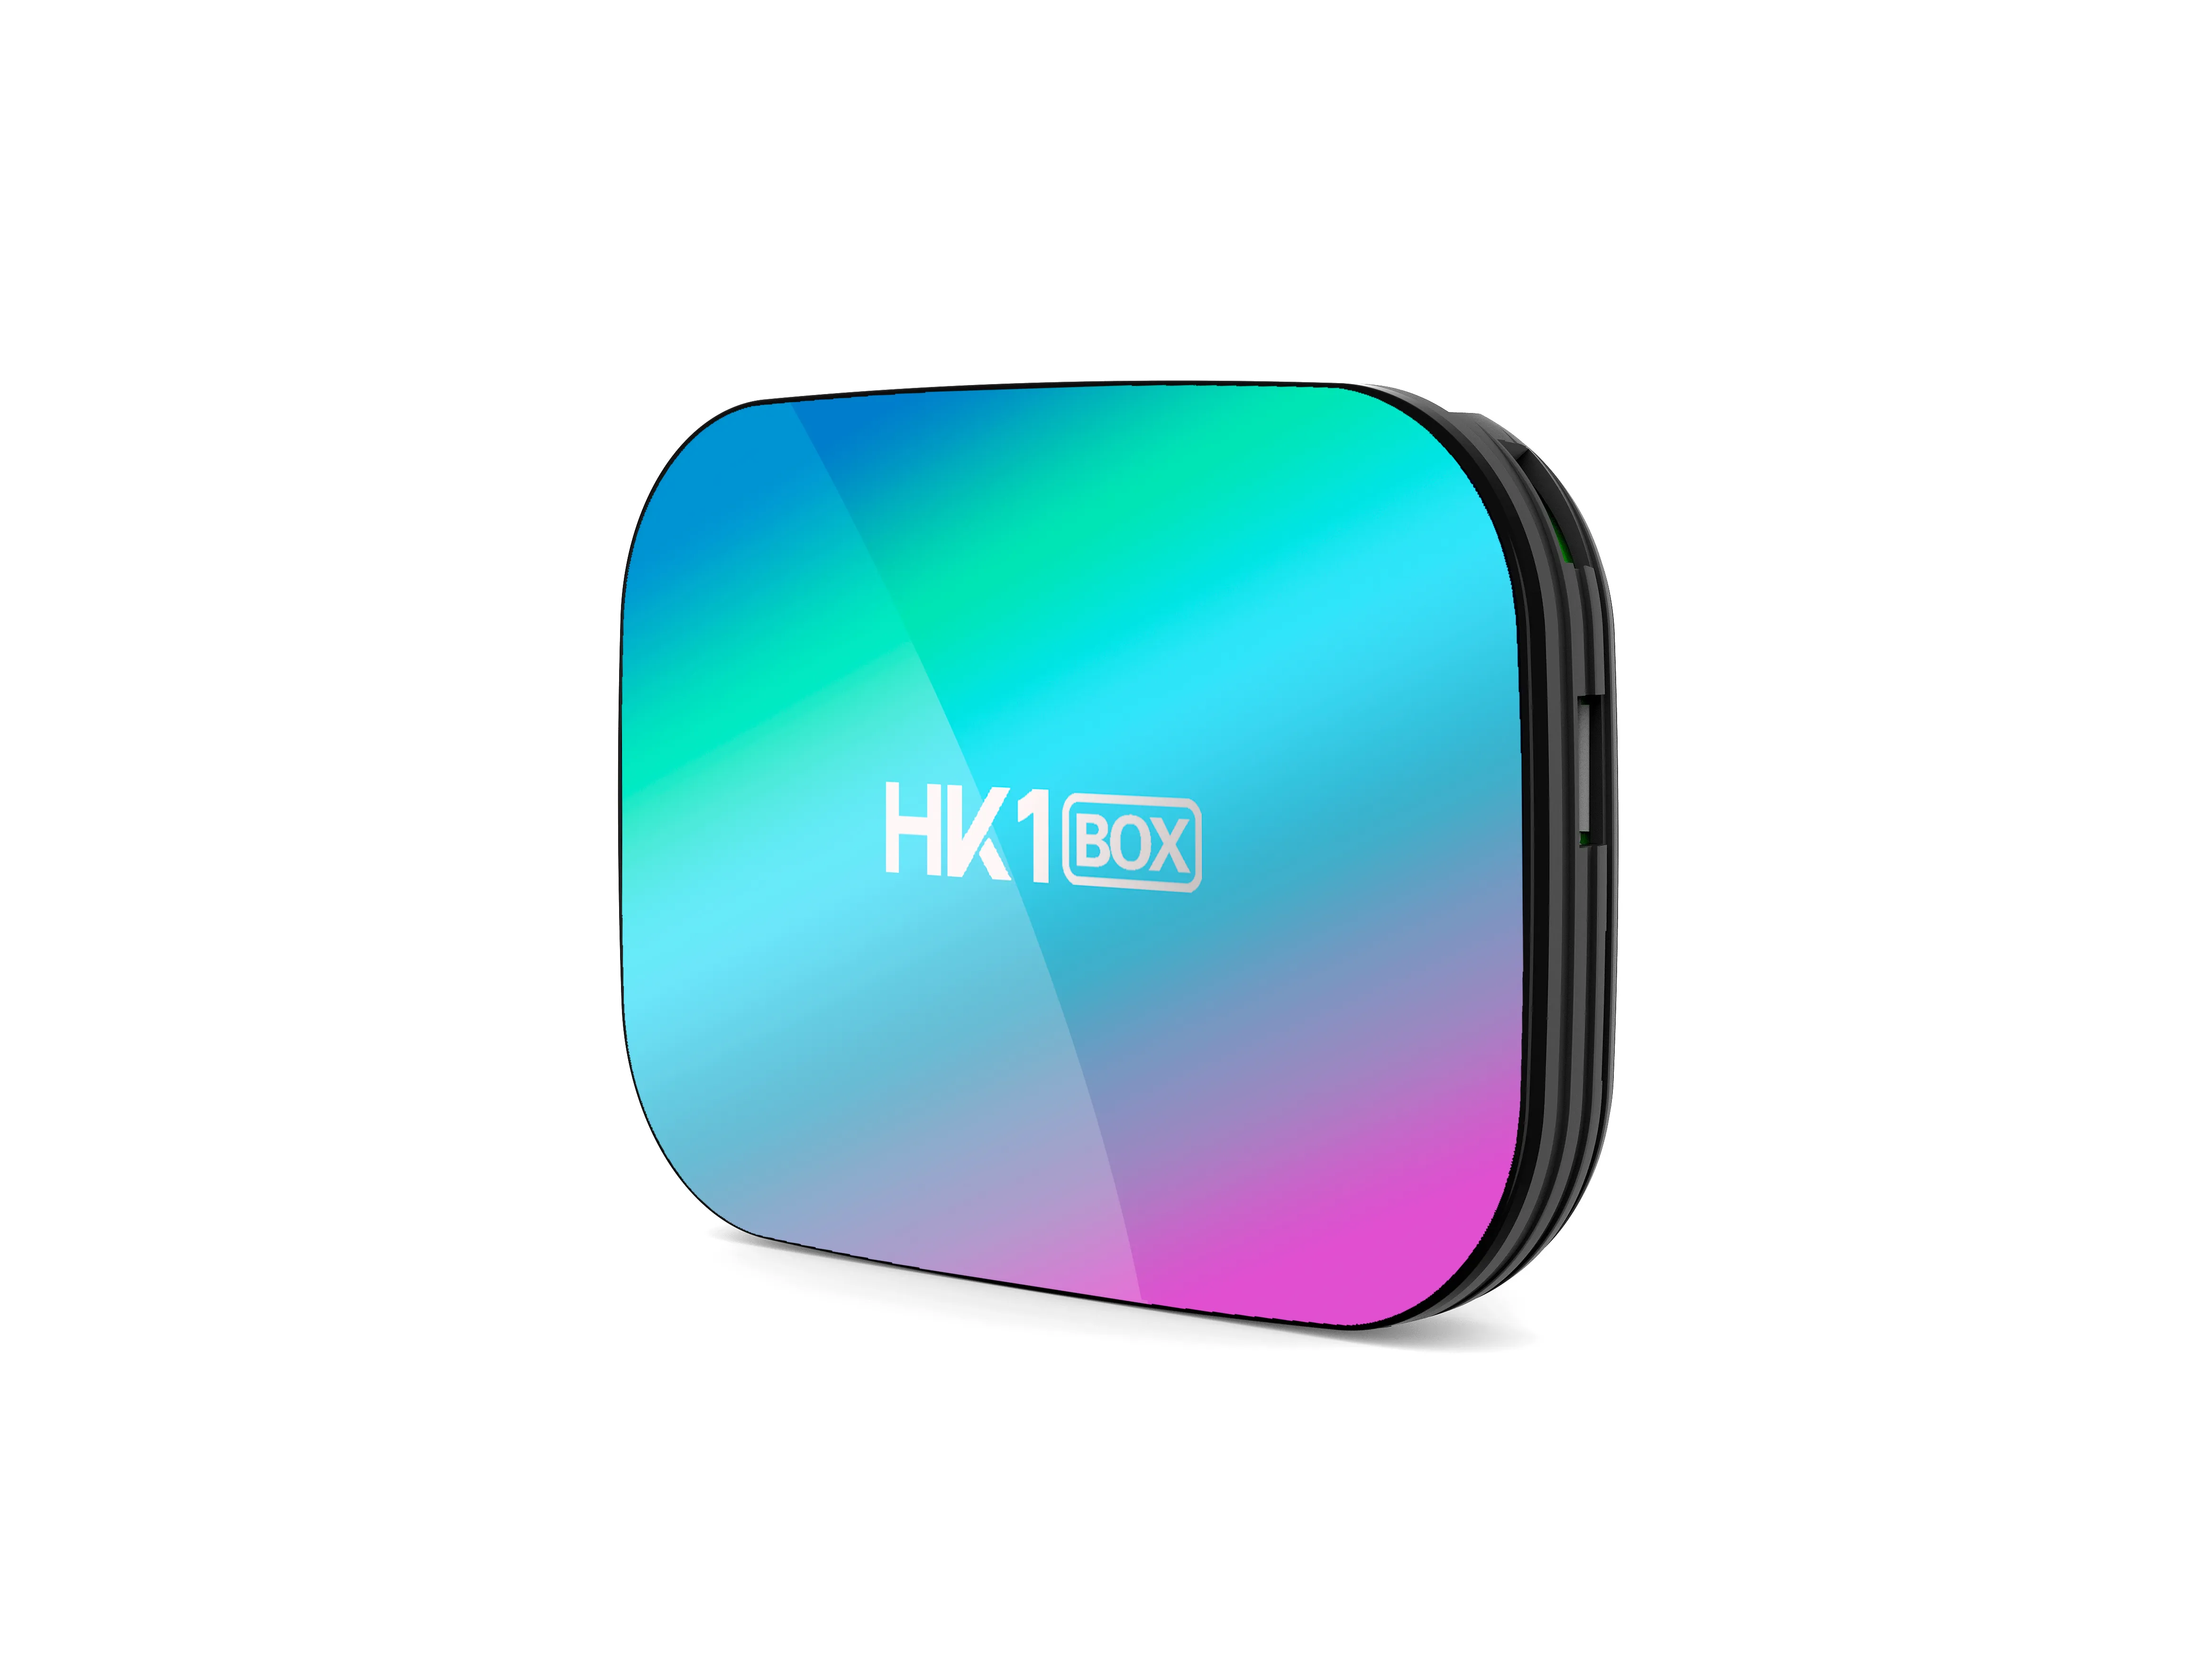 Hiszpania w magazynie HK1 Box android 9.0 TV Box Amlogic S905x3 Quad Core 4 GB 32 GB Dual WIFI 100m Streaming Smart Media Player